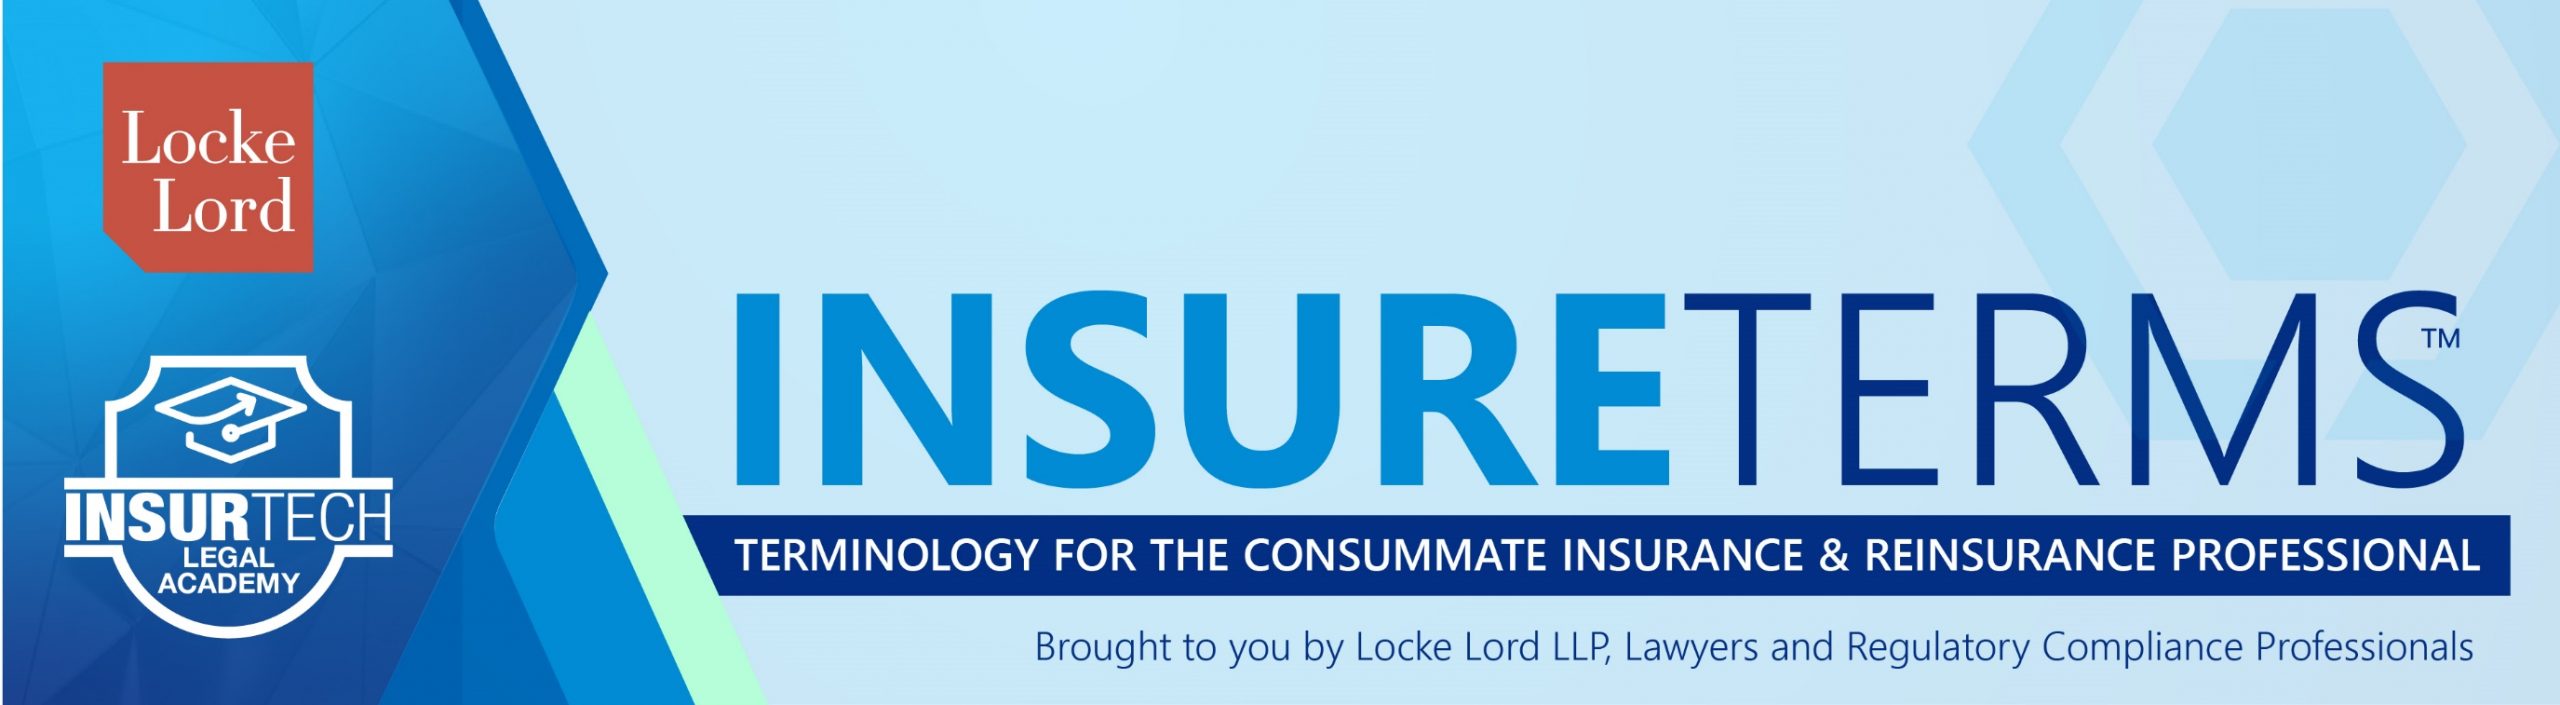 InsureTerms - Locke Lord